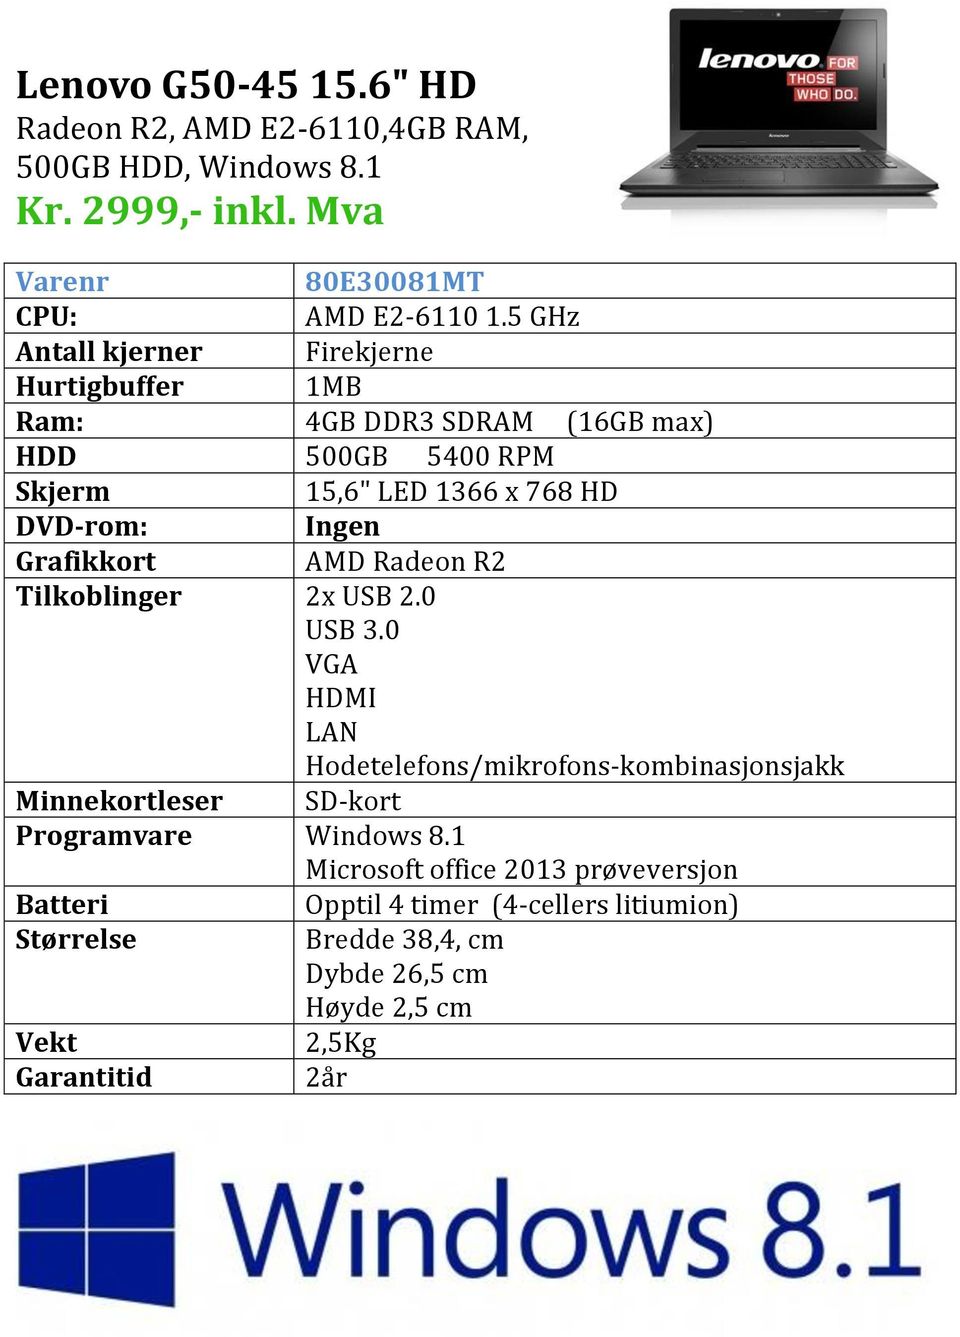 5 GHz Antall kjerner Firekjerne Hurtigbuffer 1MB Ram: 4GB DDR3 SDRAM (16GB max) 500GB 5400 RPM 15,6" LED 1366